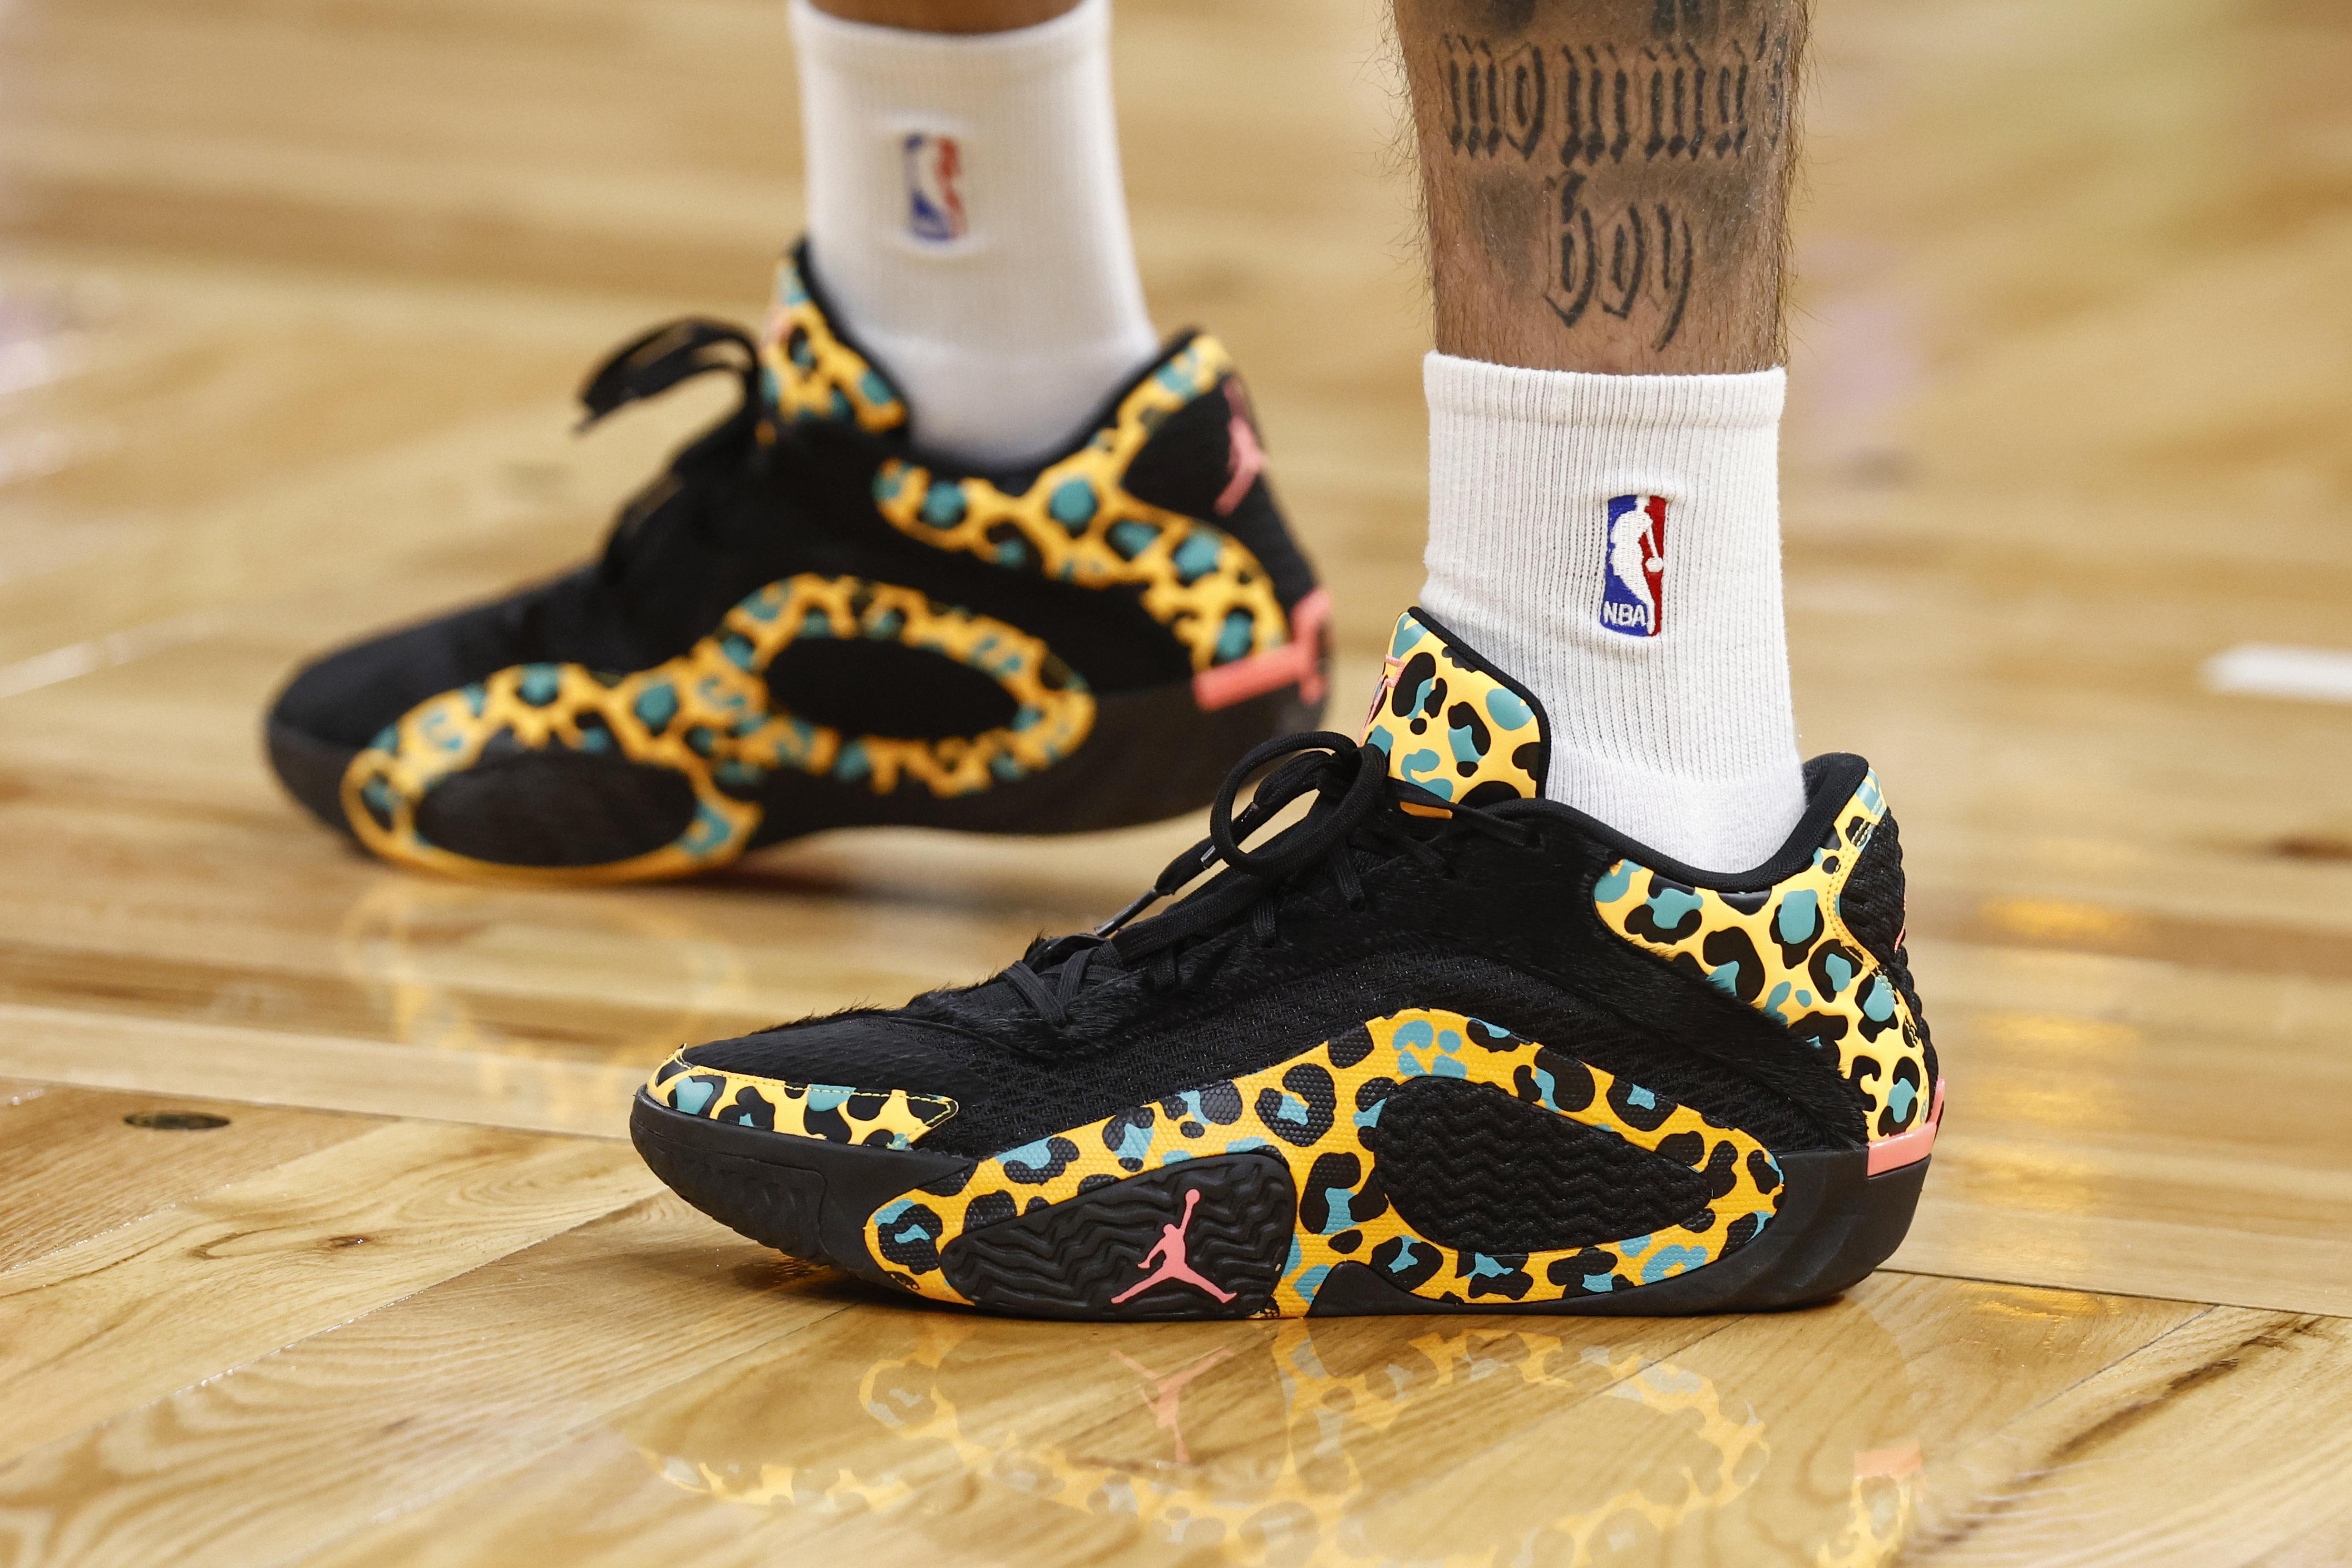 Boston Celtics forward Jayson Tatum's animal-print Jordan Brand sneakers.